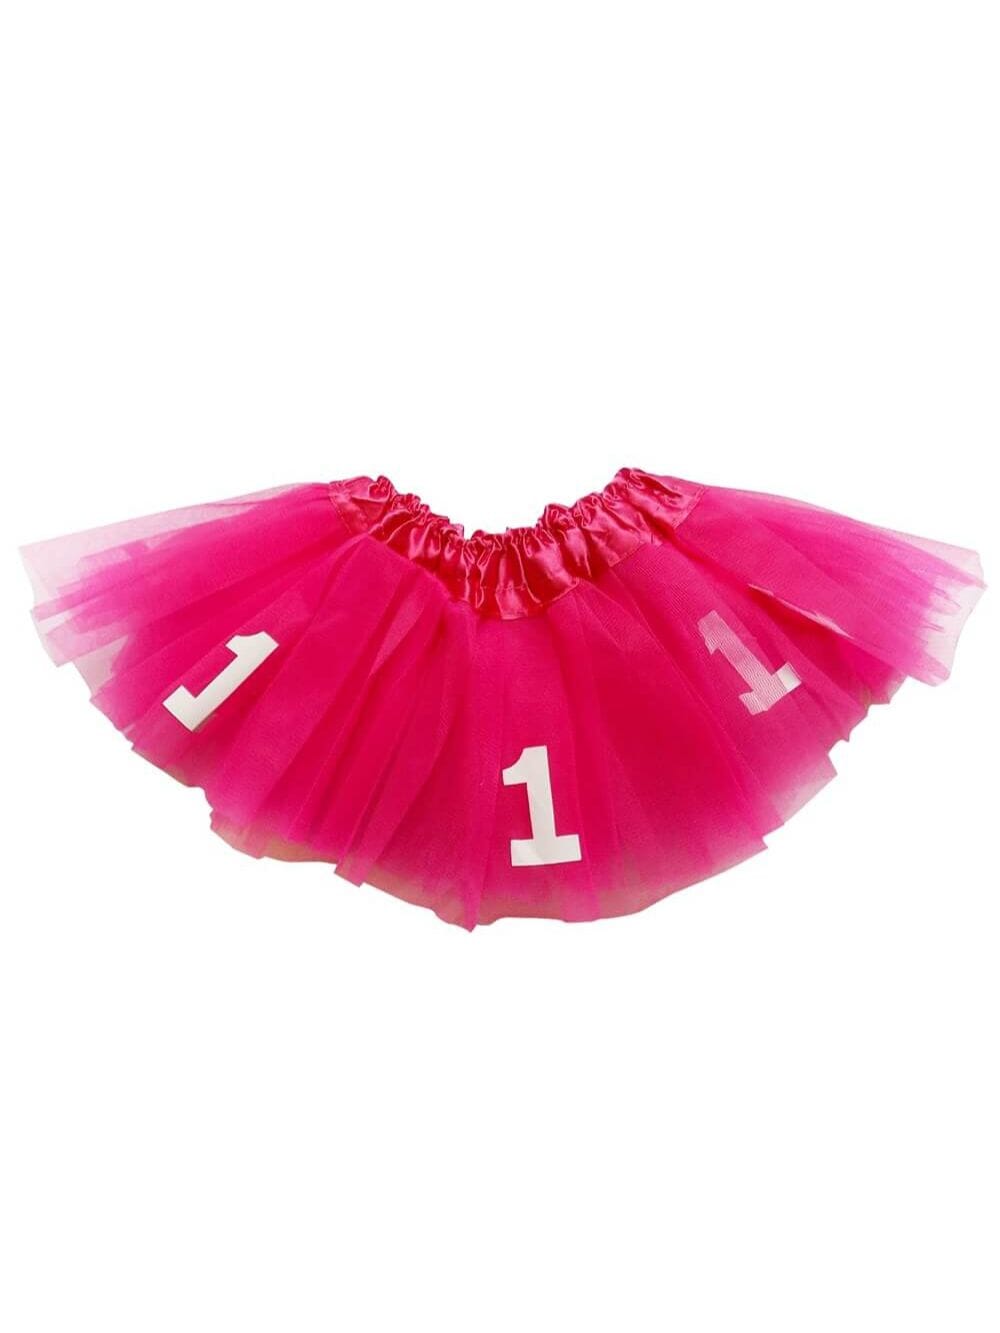 Hot Pink First Birthday Tutu Skirt - Baby Size Birthday Party Dress Costume Ballet Tutu - Sydney So Sweet